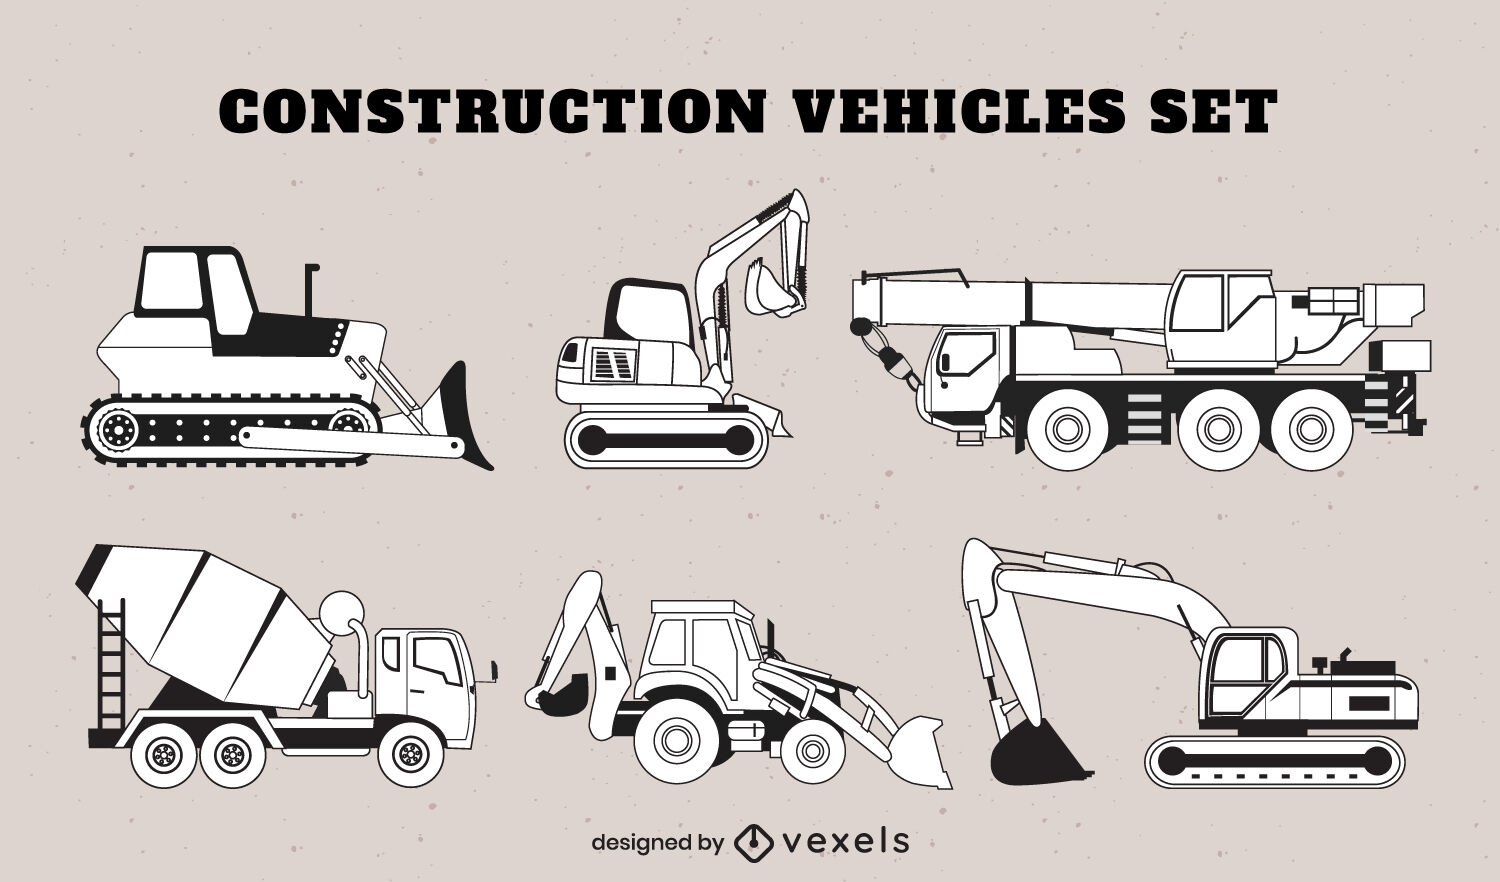 Construction vehicles transportation set